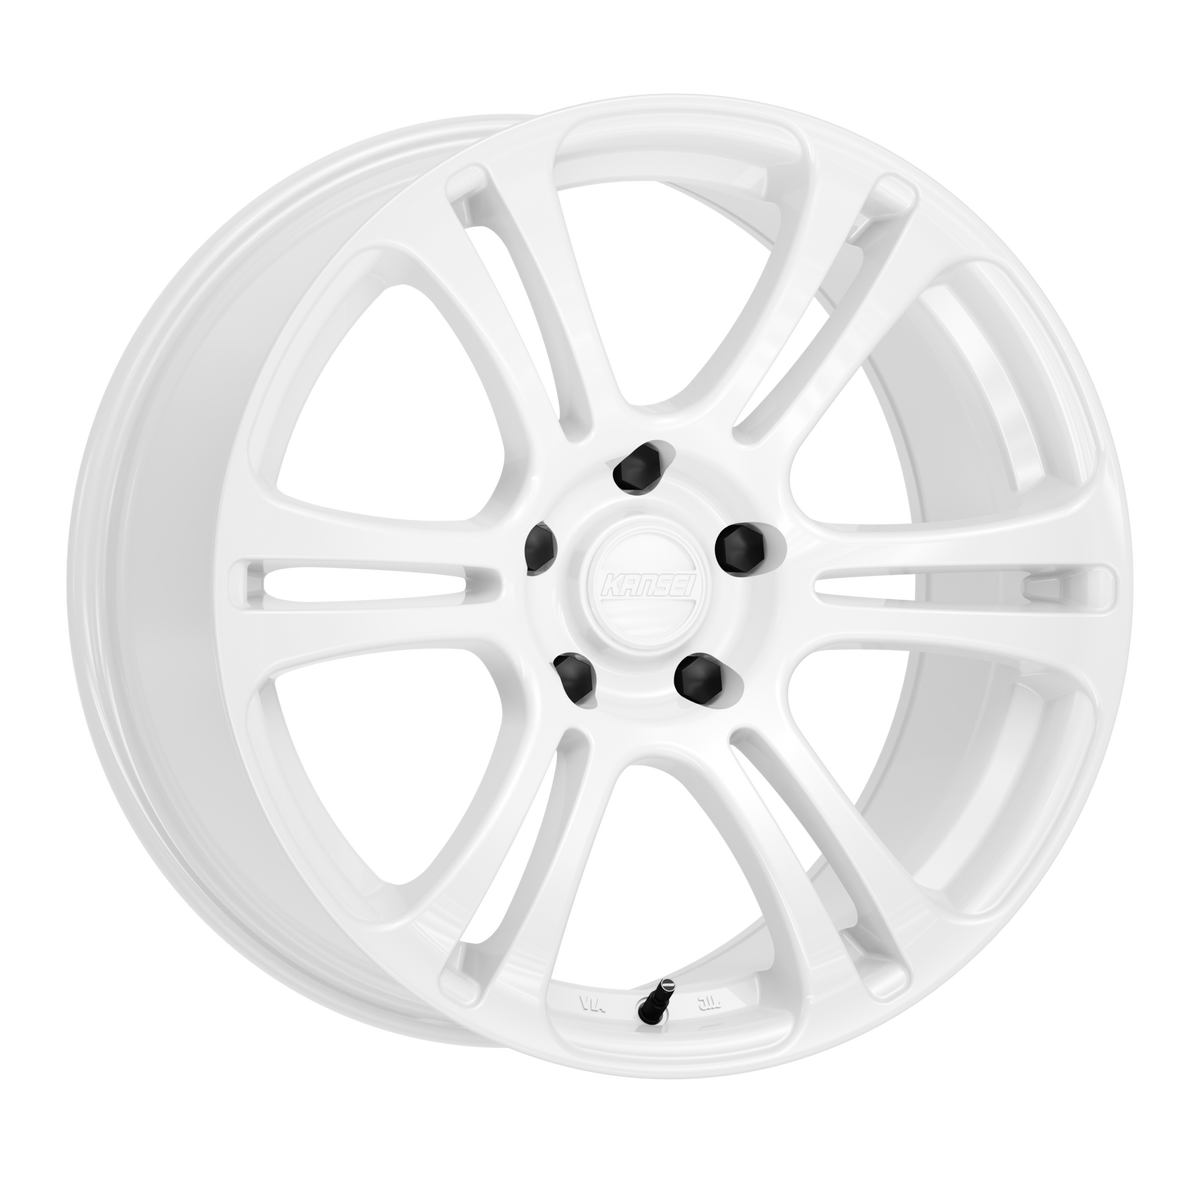 K16W NEO Wheel, Size: 18" x 10.50", Bolt Pattern: 5 x 114.300 mm, Backspace: 6.22" [Finish: Gloss White]